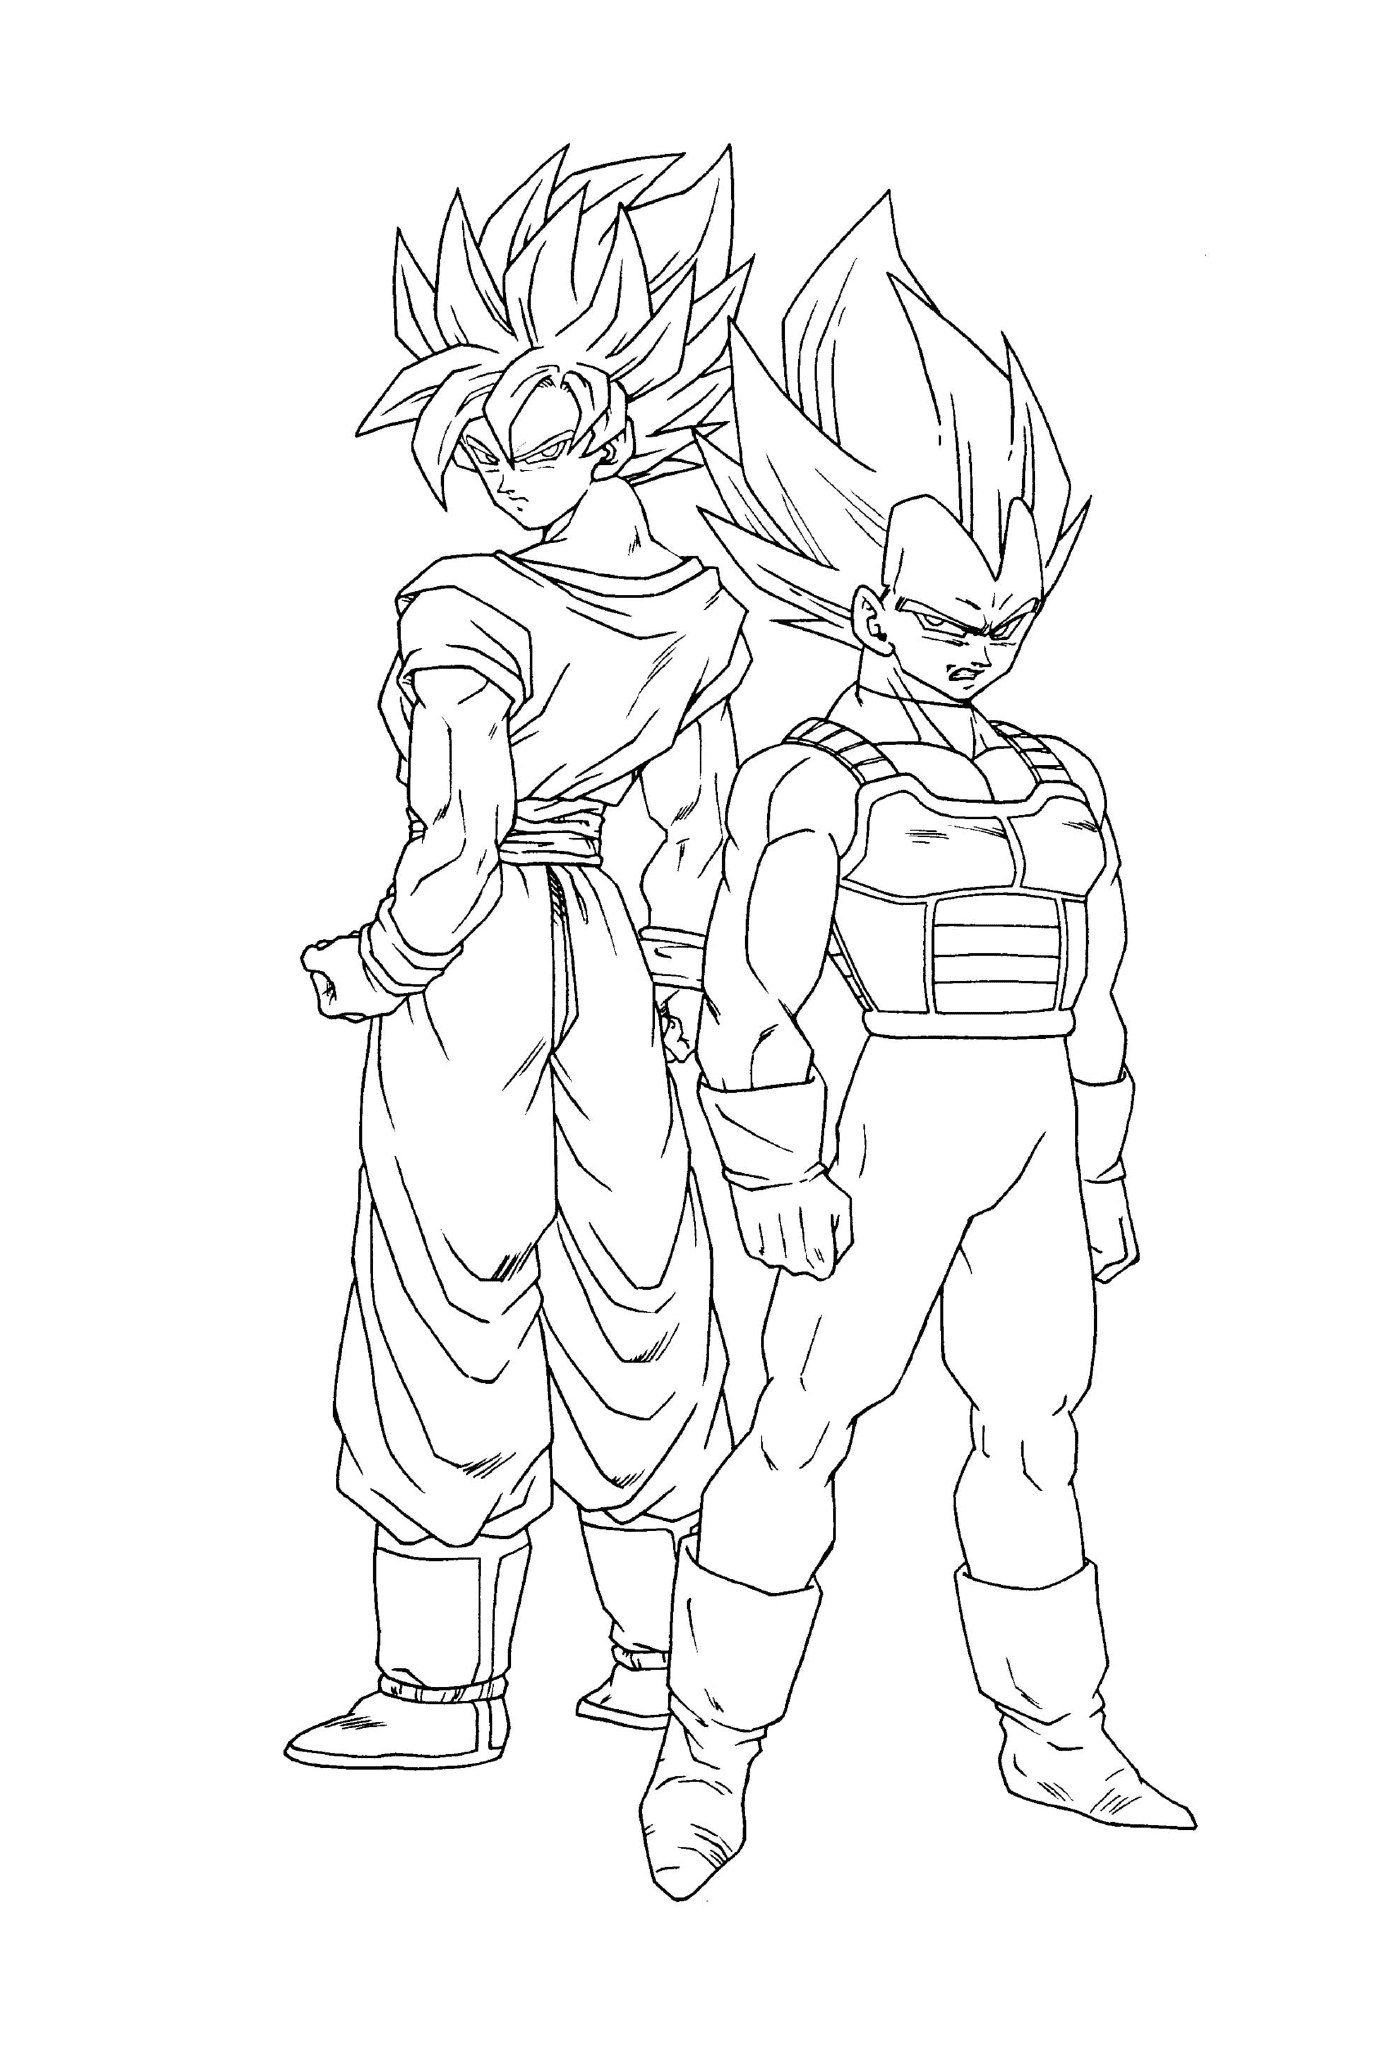  Goku y su hermano Vegeta de Dragon Ball Z 